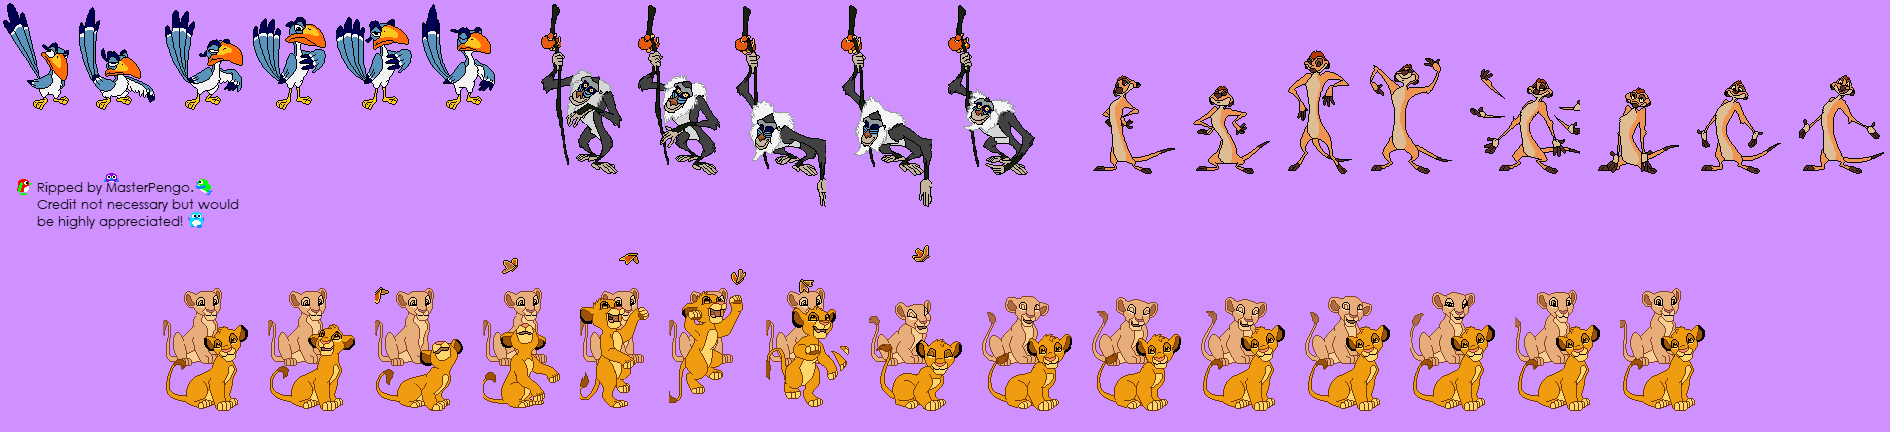 Disney's Animated Storybook: The Lion King - Navigation Bar